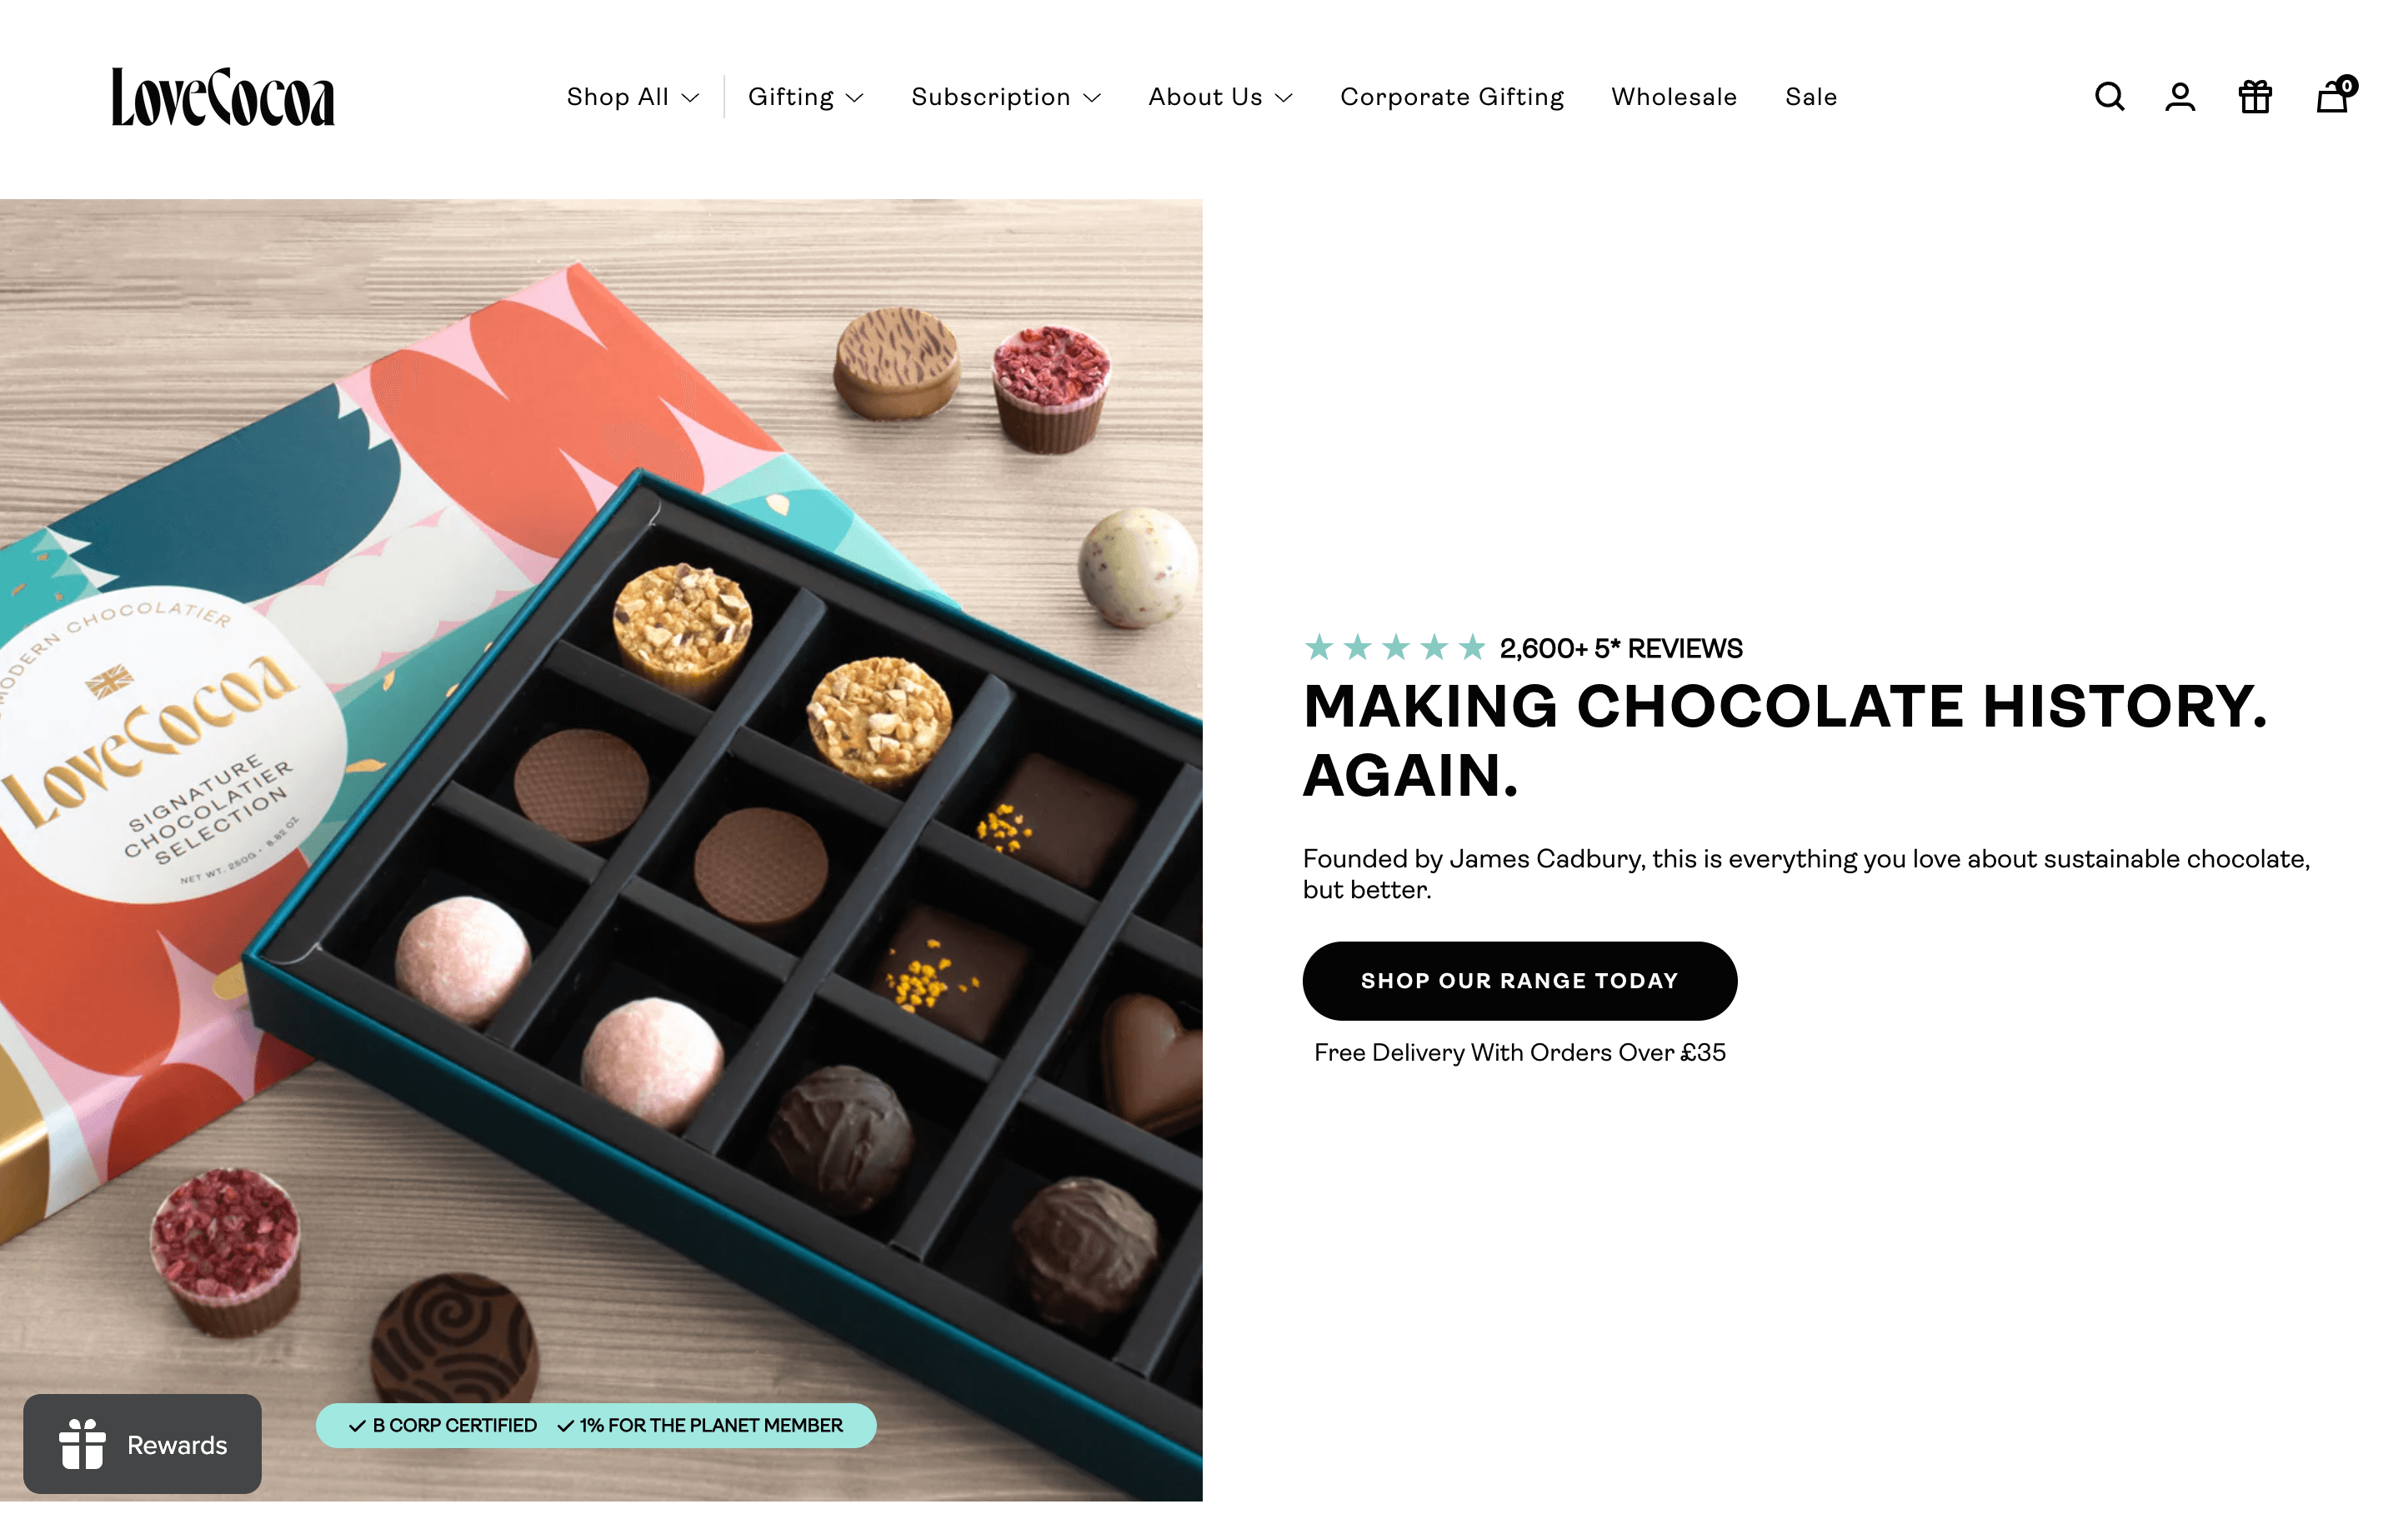 Love Cocoa 主页的屏幕截图显示了一盒松露巧克力。